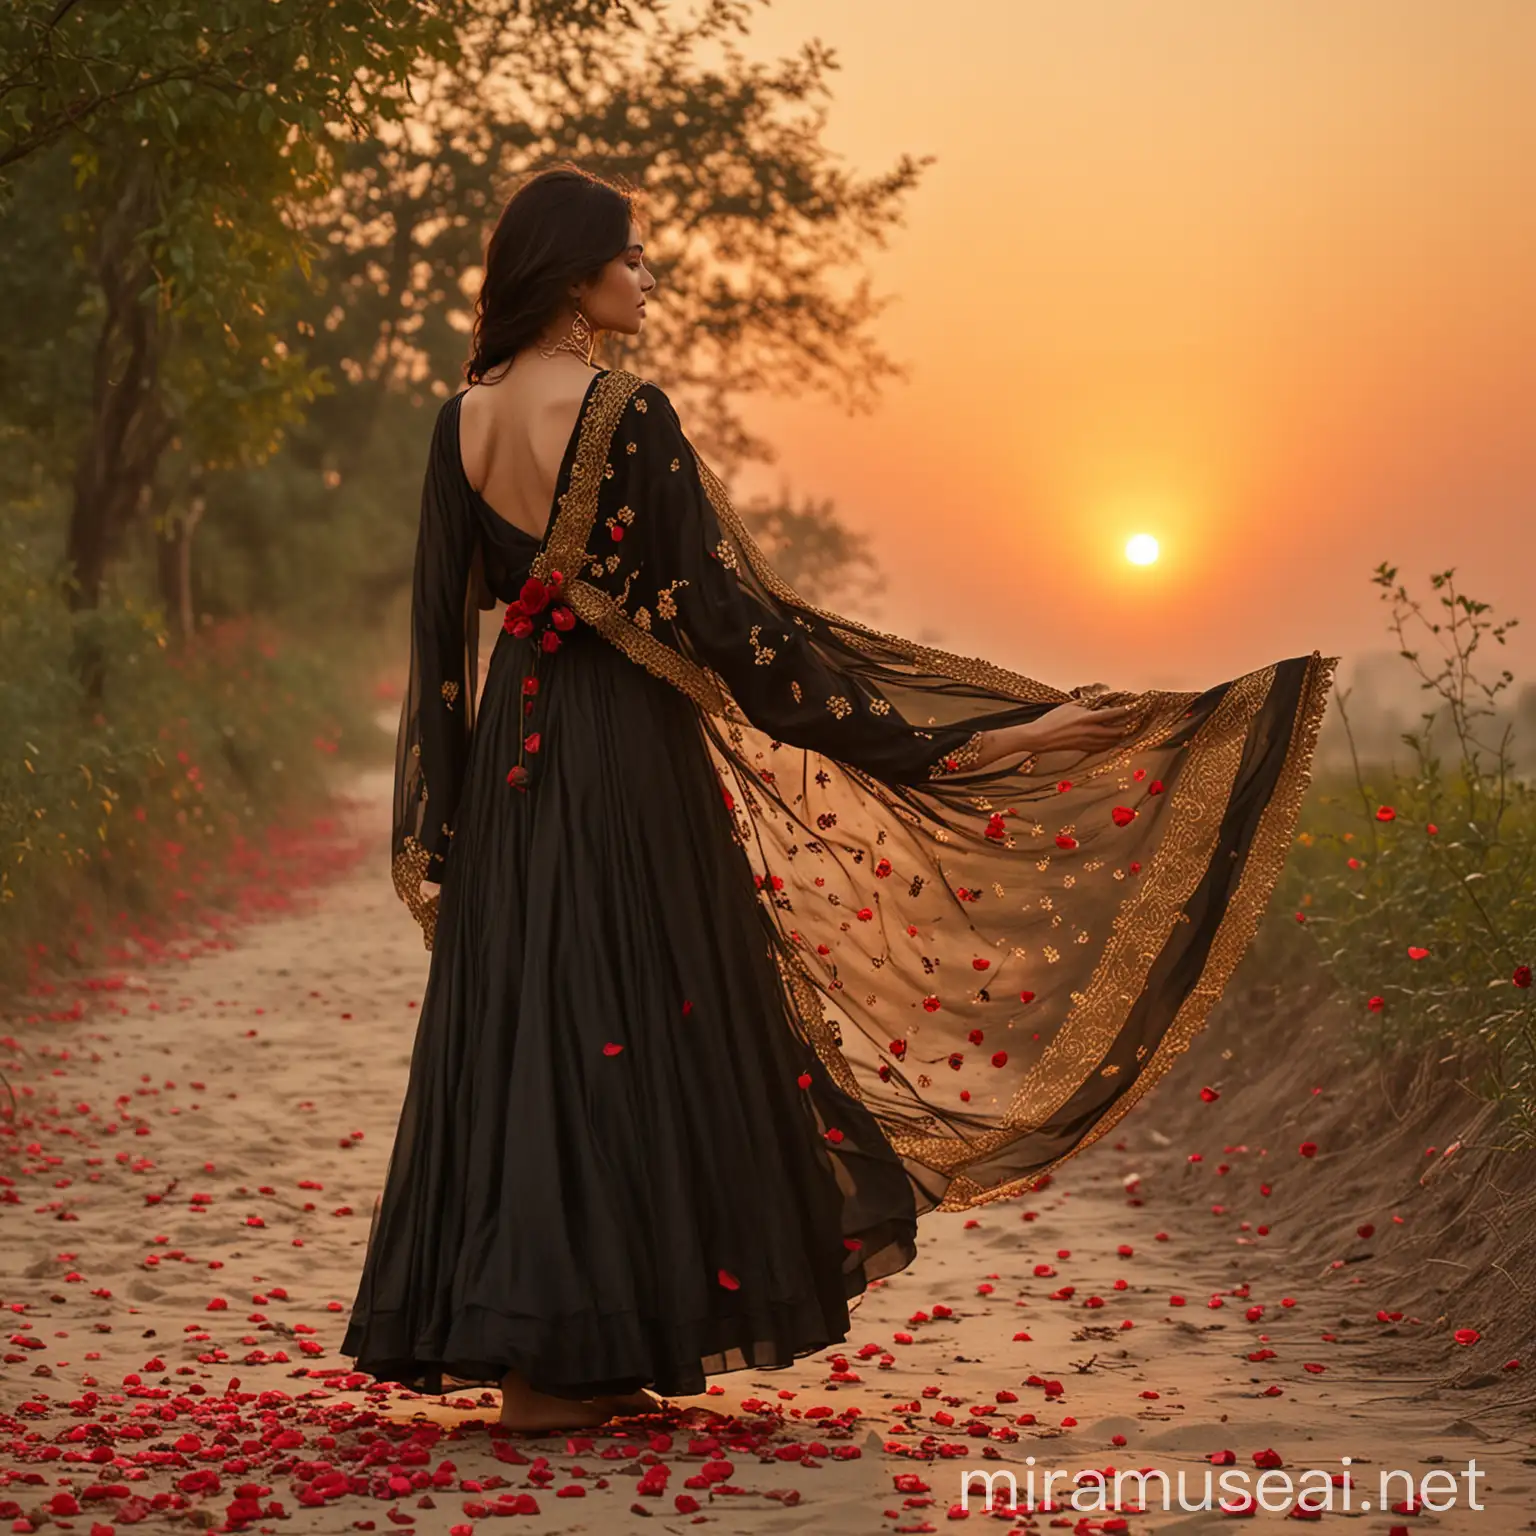 Graceful Woman in Black Dupatta Under Golden Sunset with Falling Rose Petals